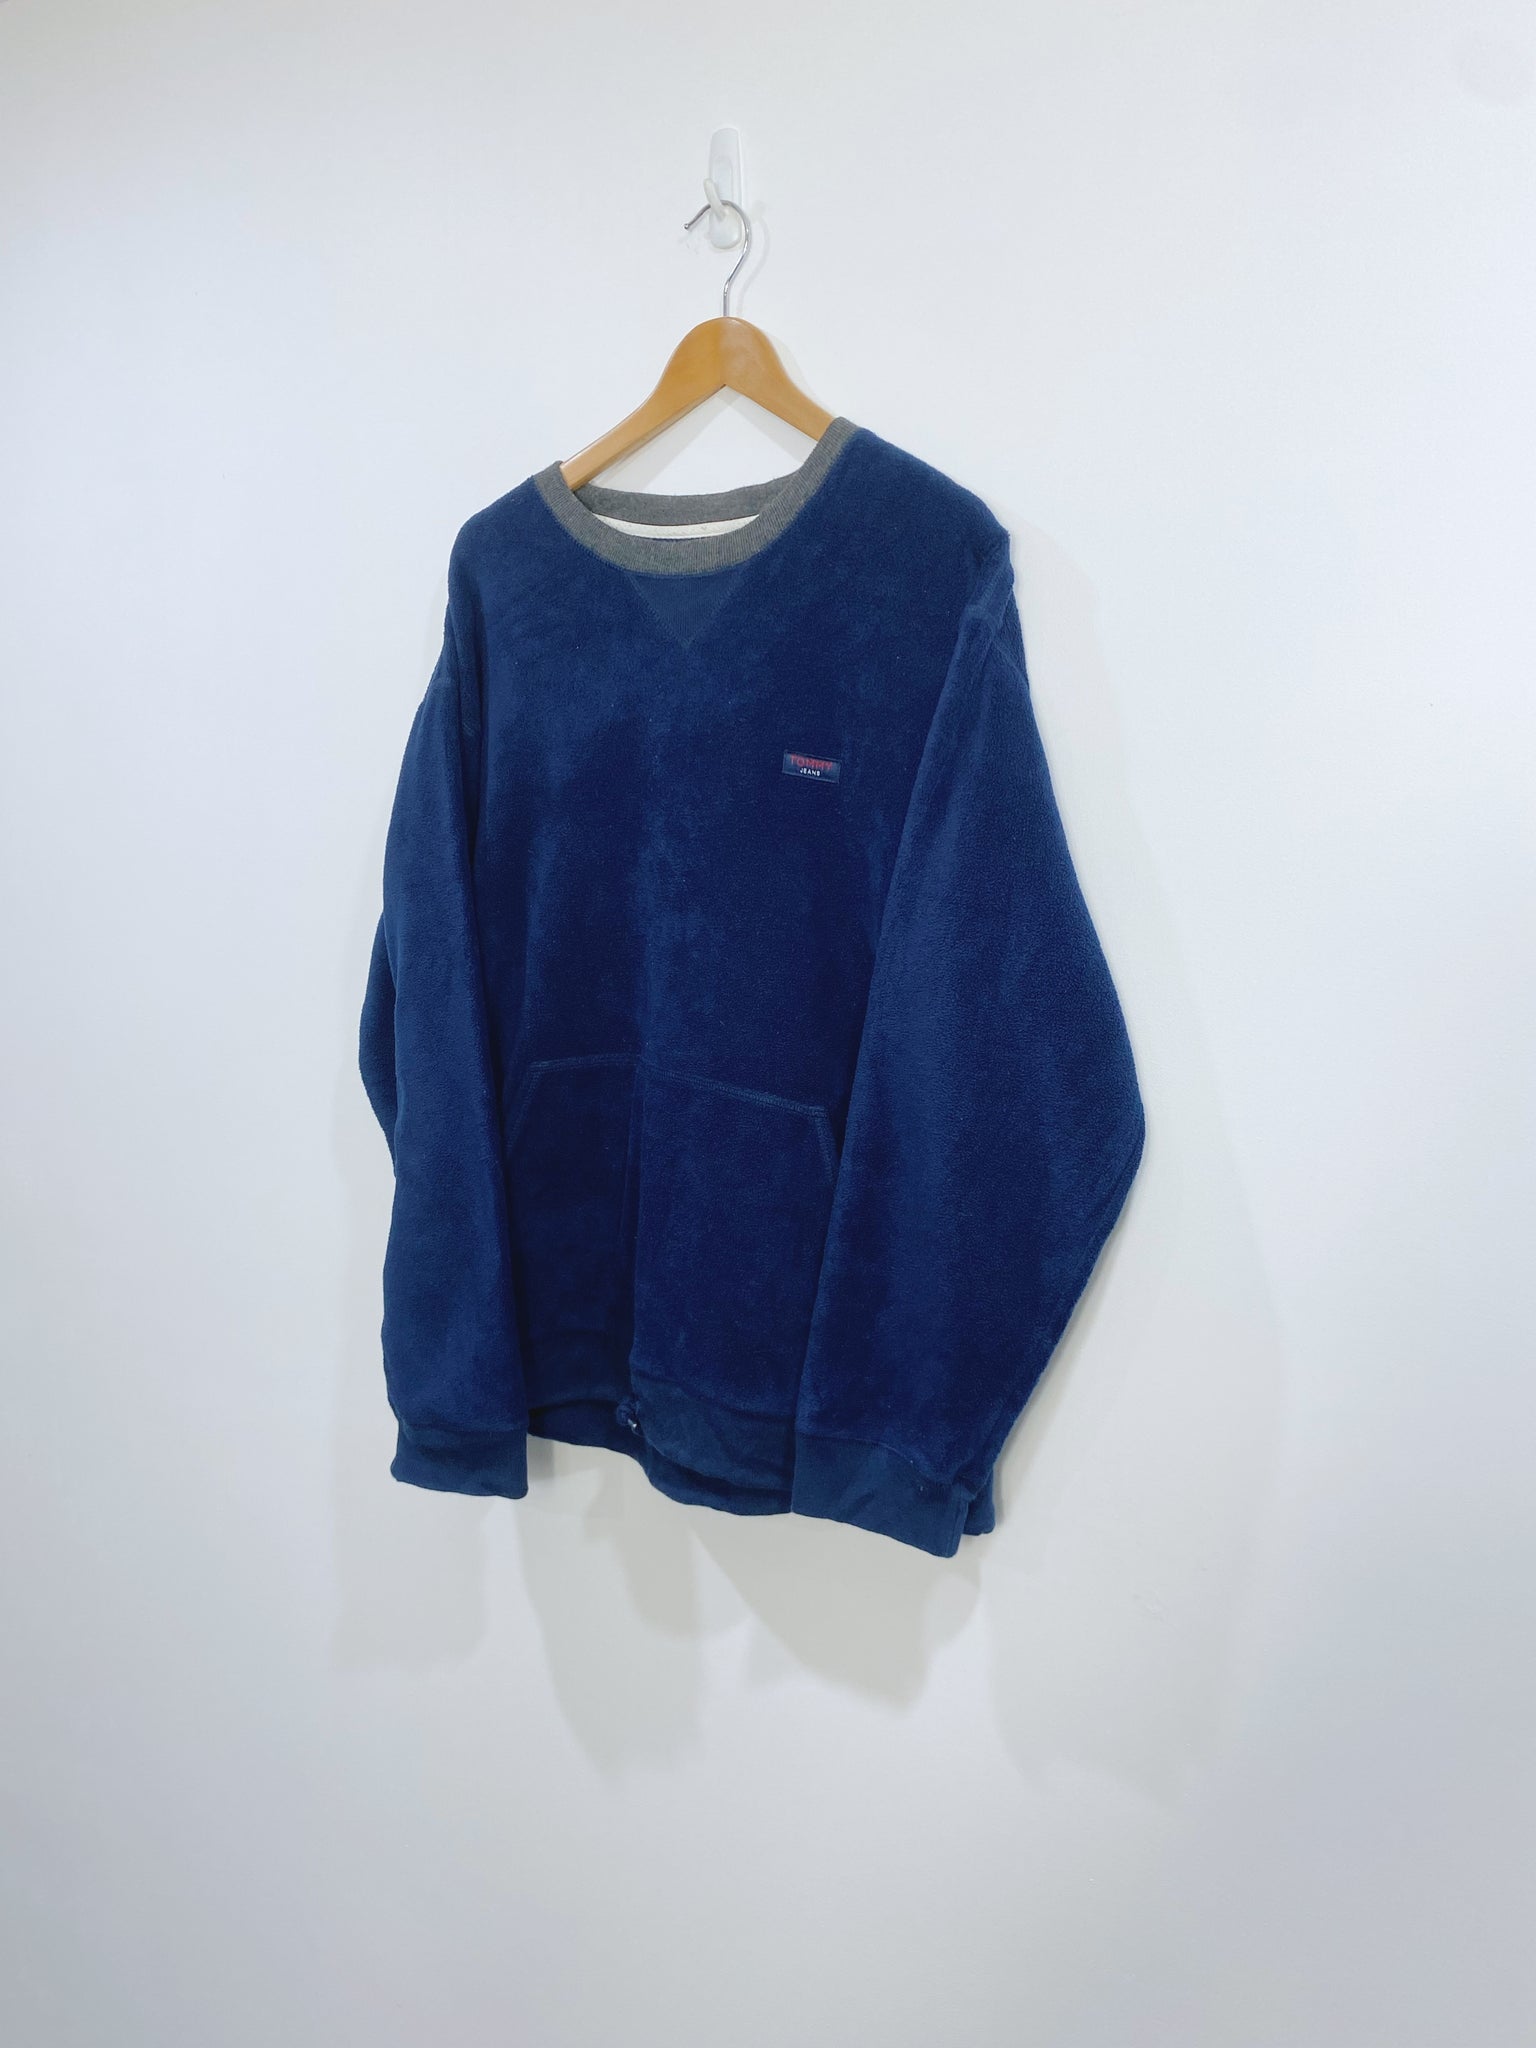 Vintage Tommy Hilfiger Embroidered Fleece Sweatshirt L